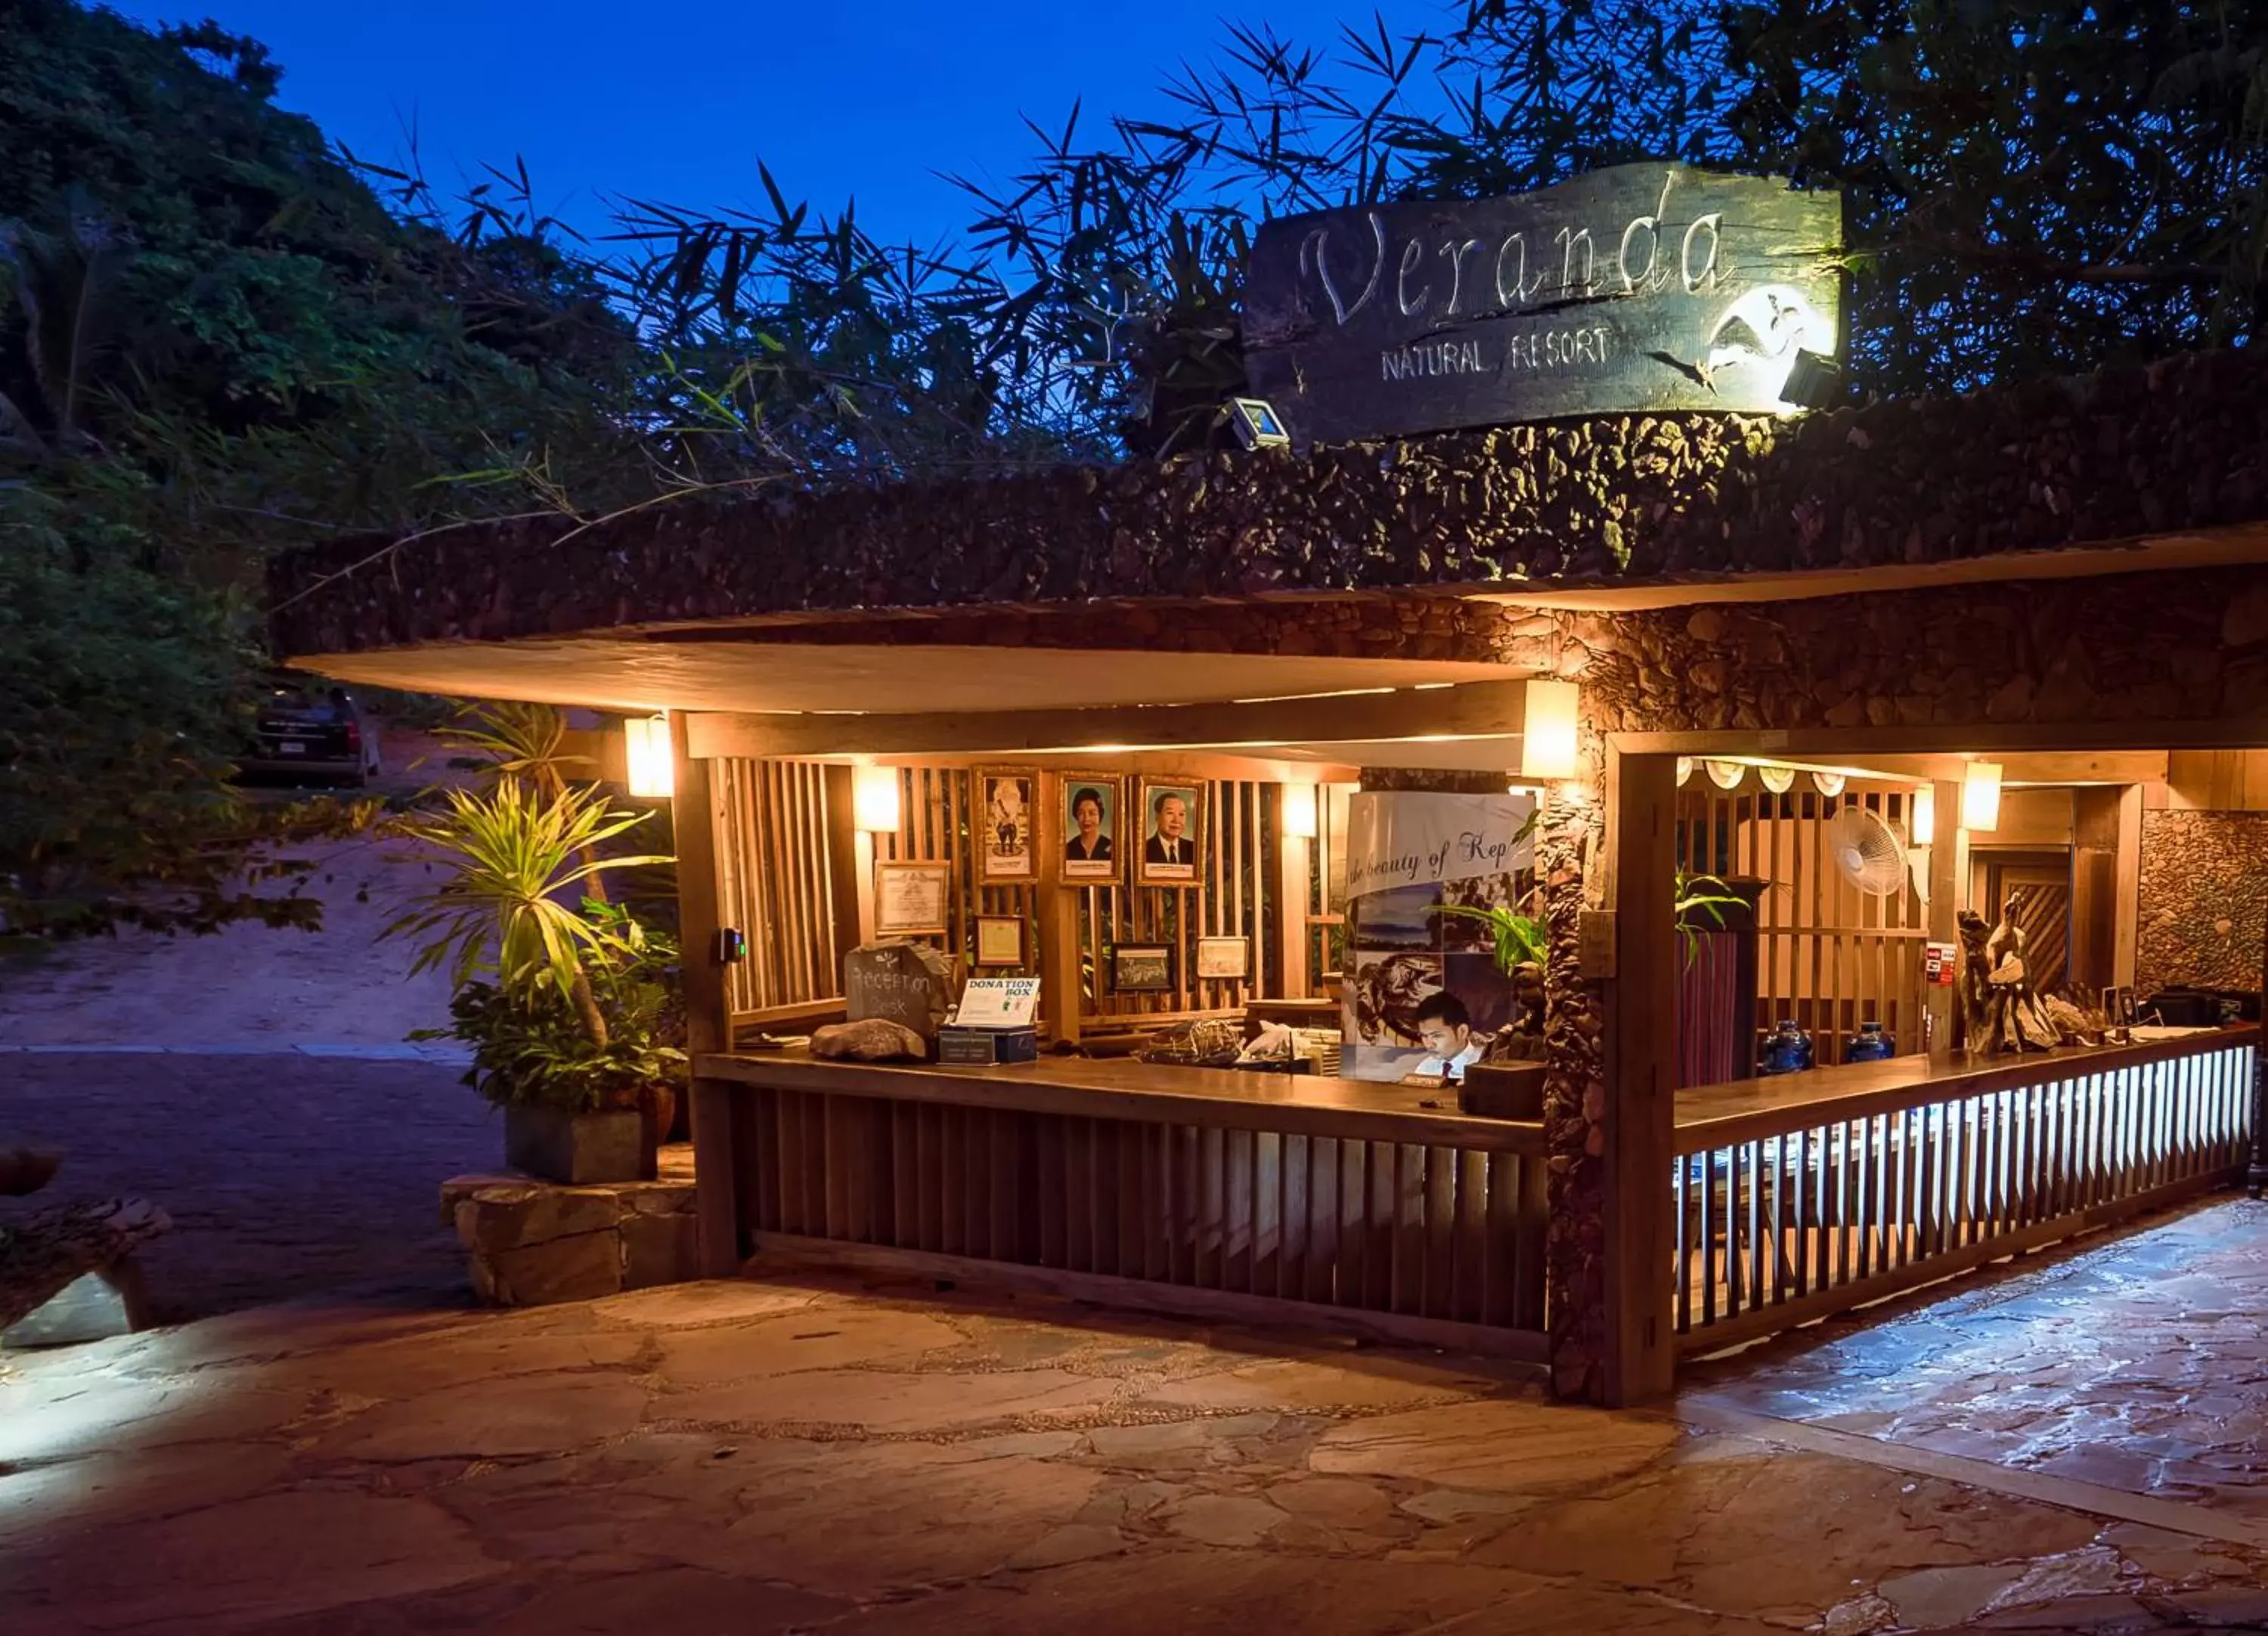 Night in Veranda Natural Resort